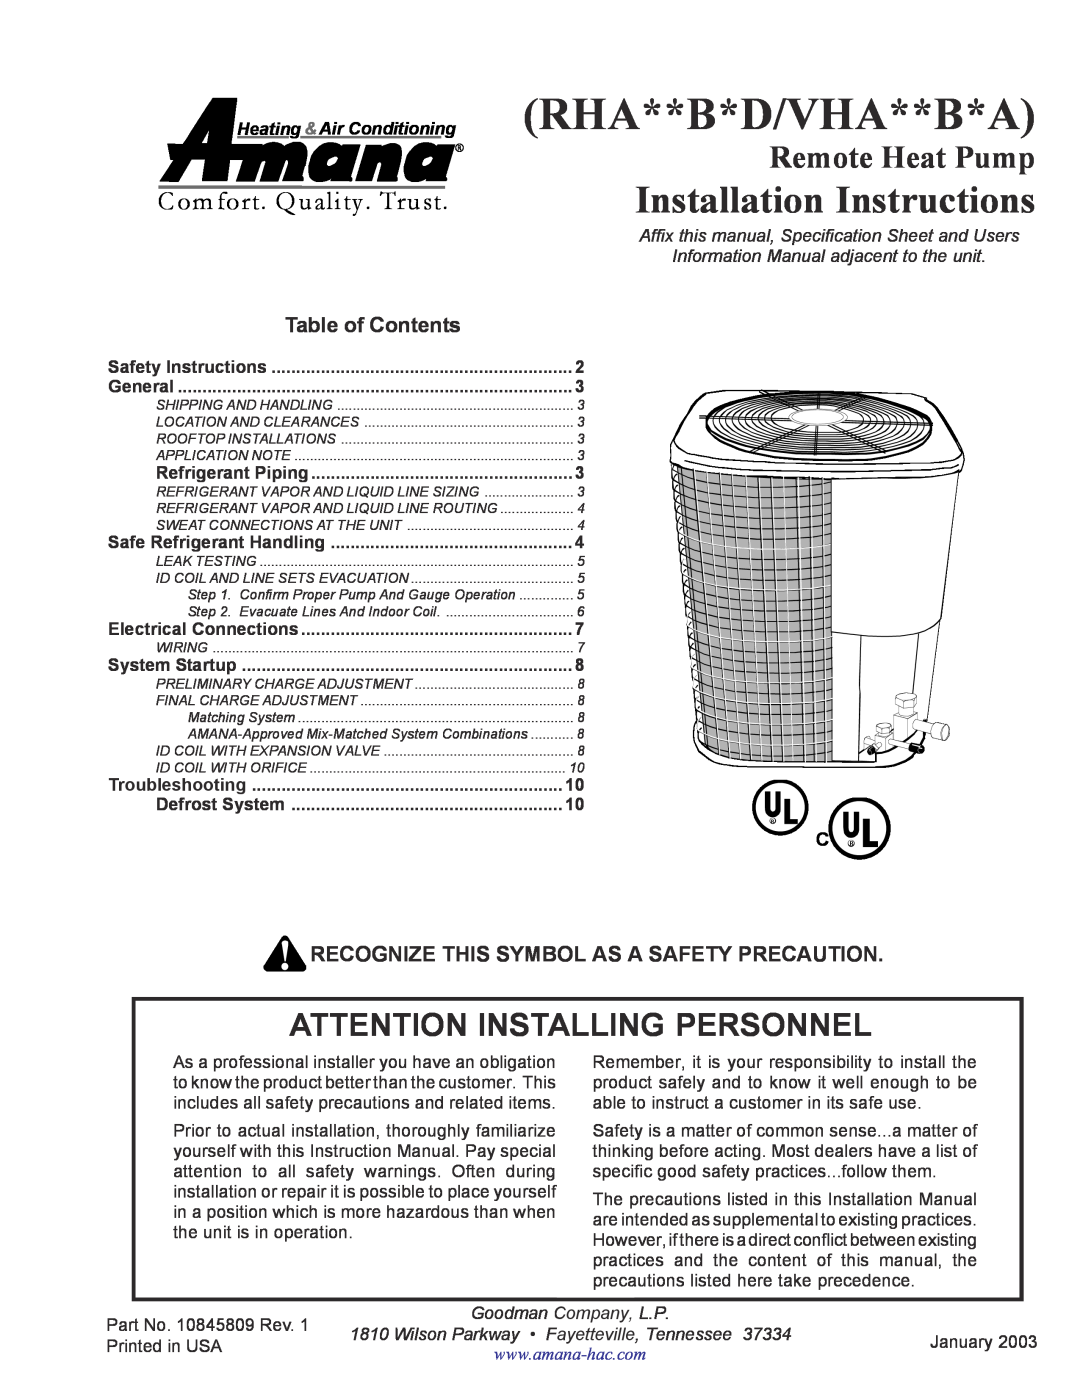 Goodman Mfg RHA**B*D installation instructions Attention Installing Personnel, Rha**B*D/Vha**B*A, Remote Heat Pump, 37334 